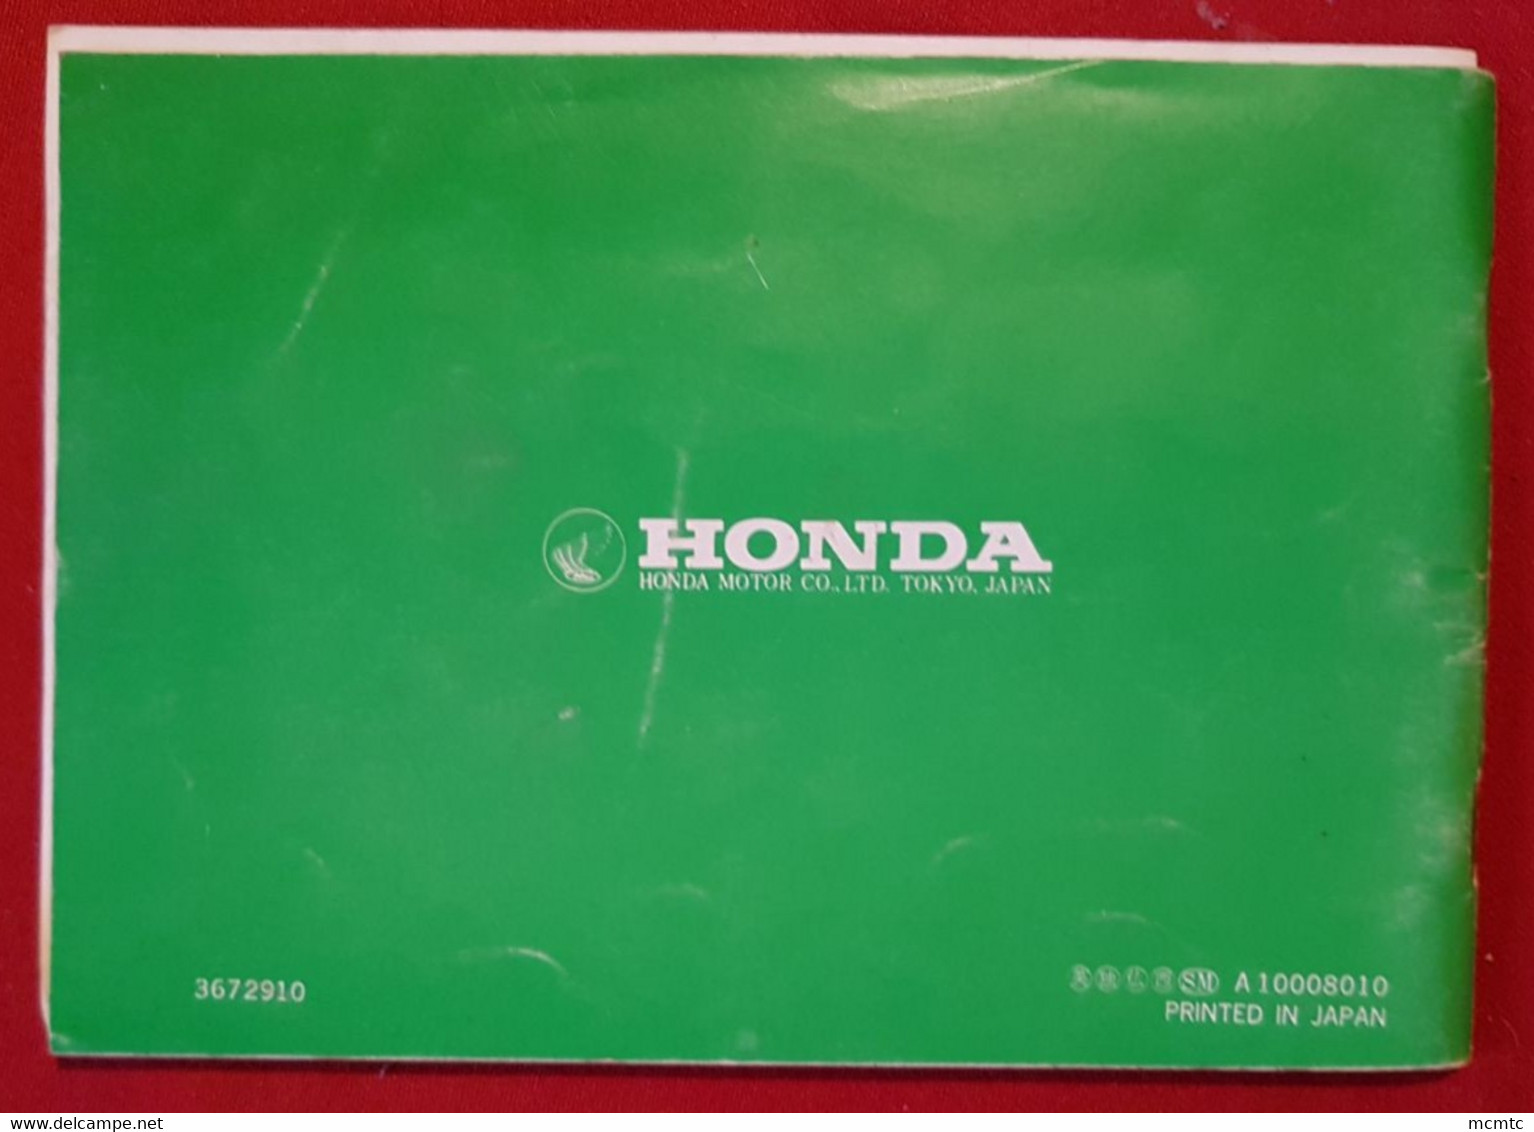 Manuel De L'utilisateur -  Motoculteur  Honda F250 - Garden